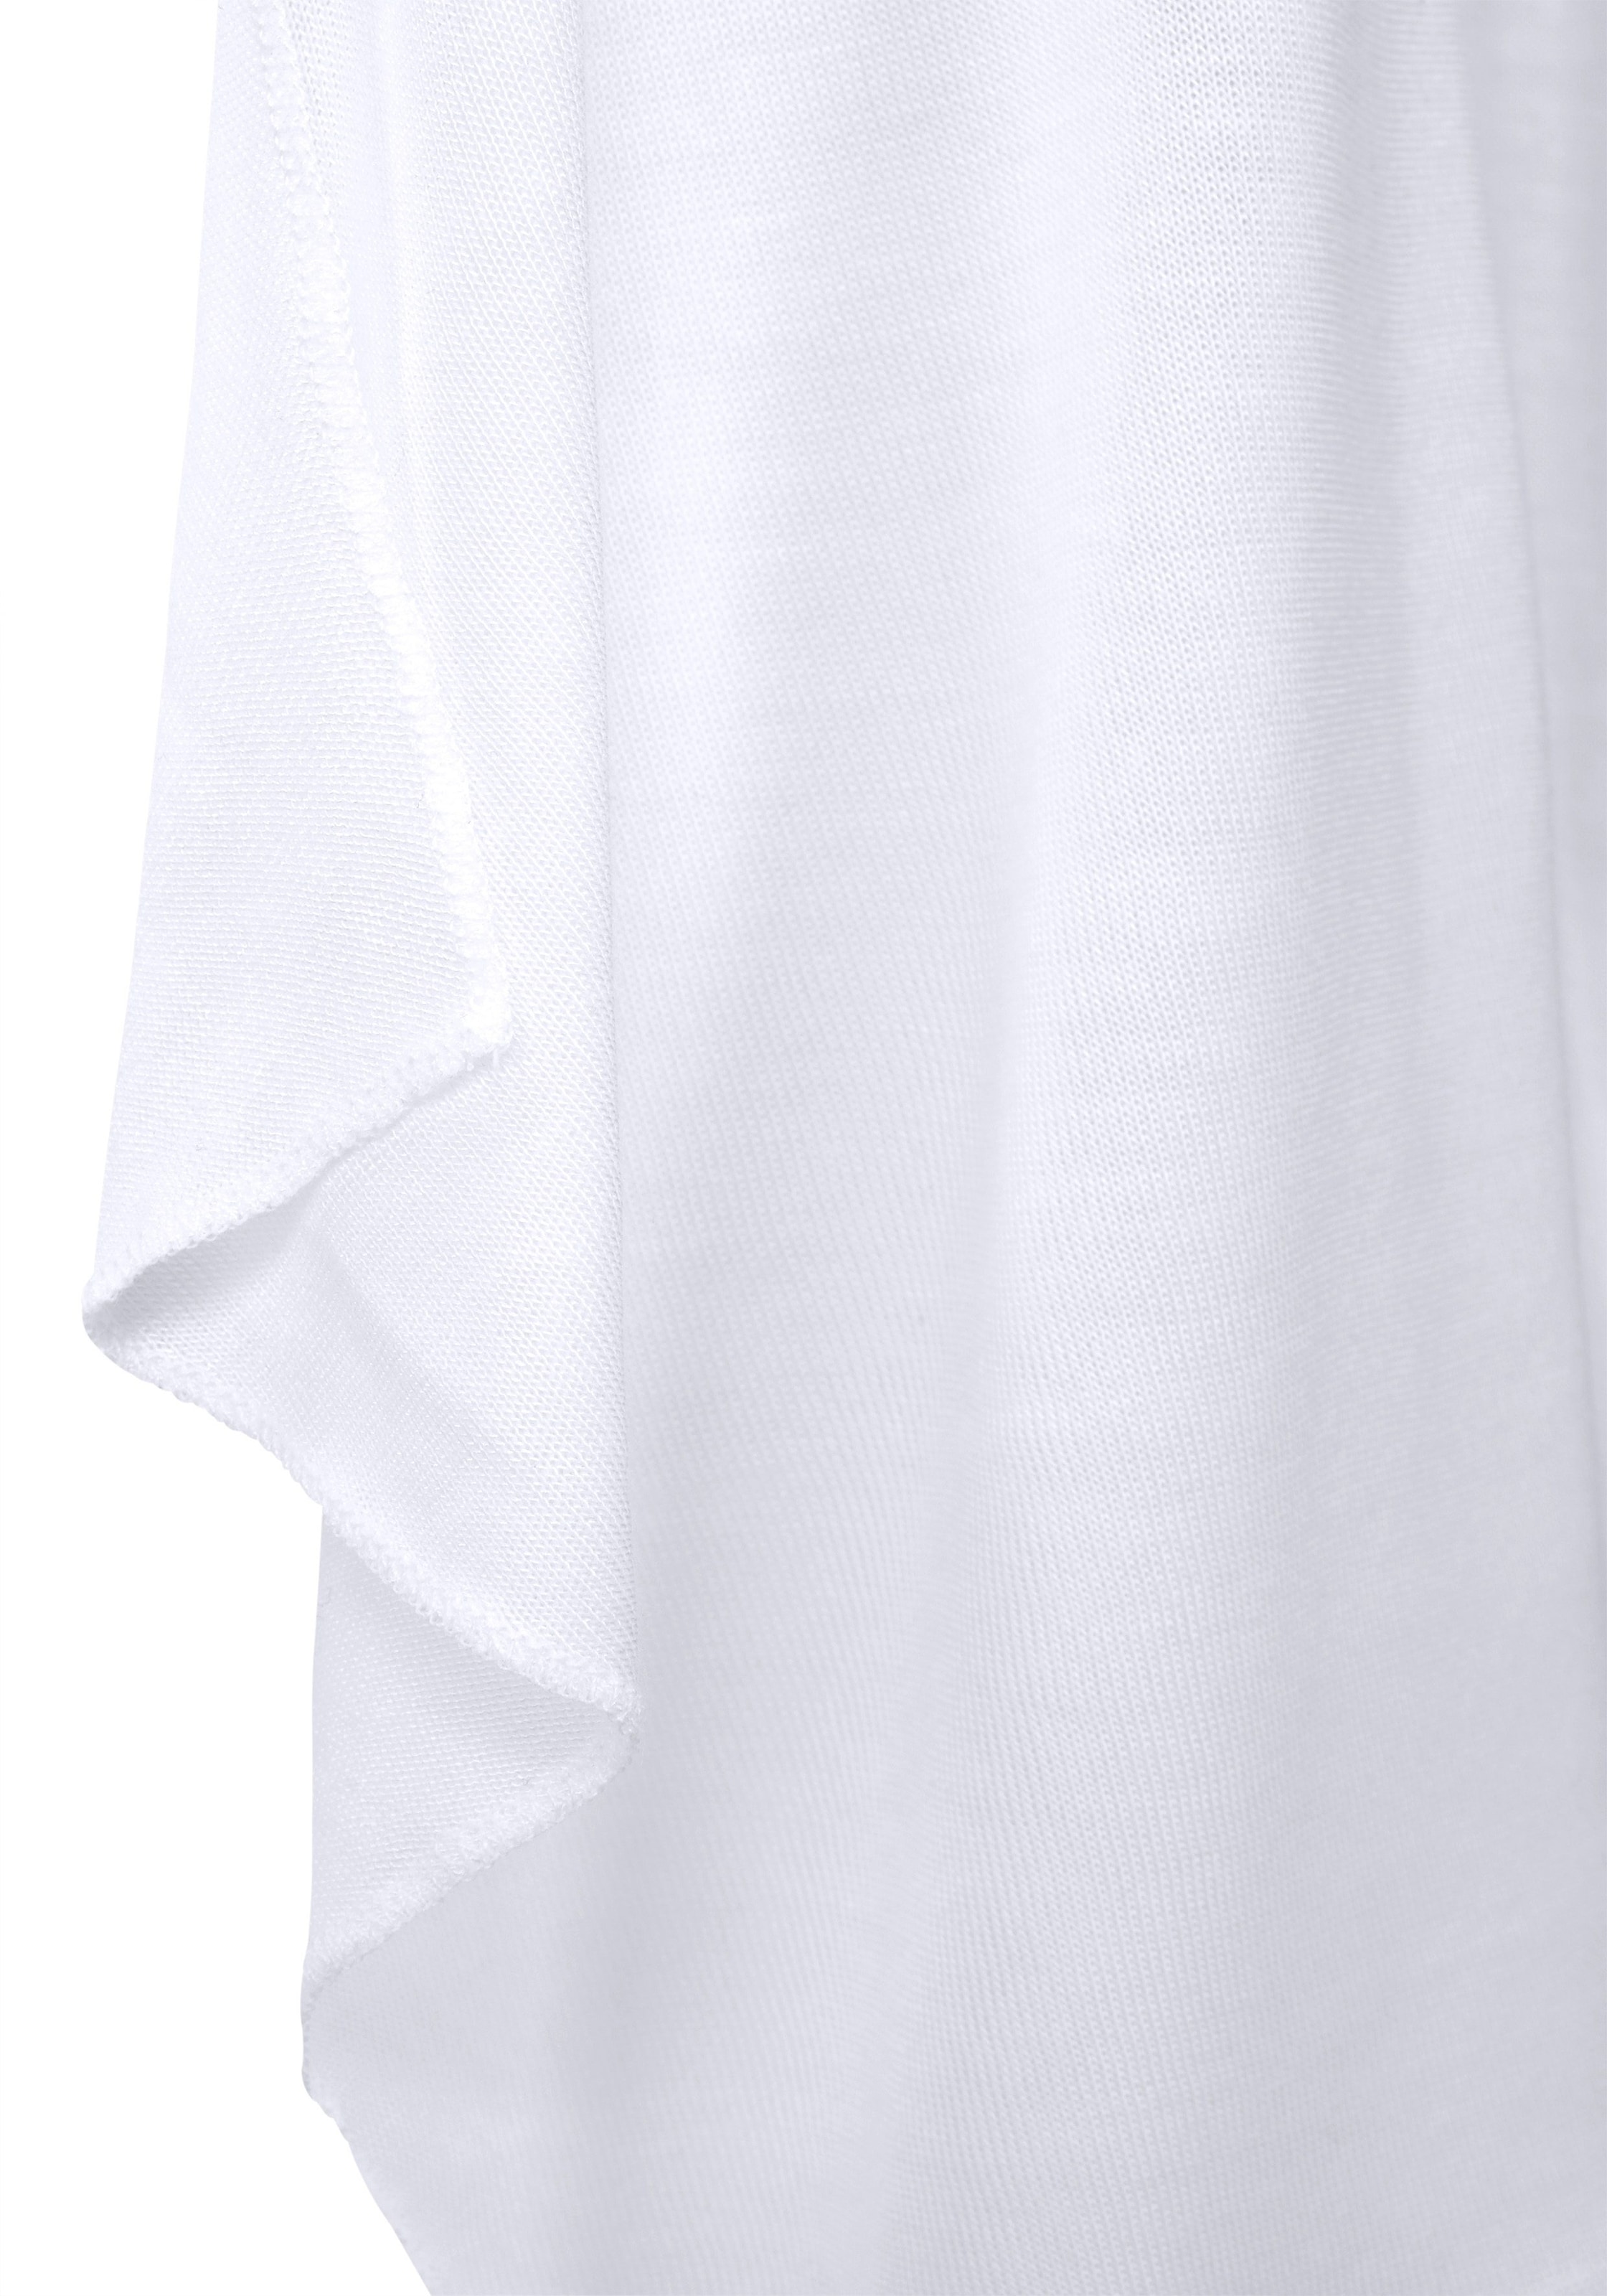 LASCANA Shirtjacke, in Strickjacke Bademode, Lingerie Sommerjacke, Jersey, & LASCANA Unterwäsche » offener | online Form, kaufen Cardigan aus